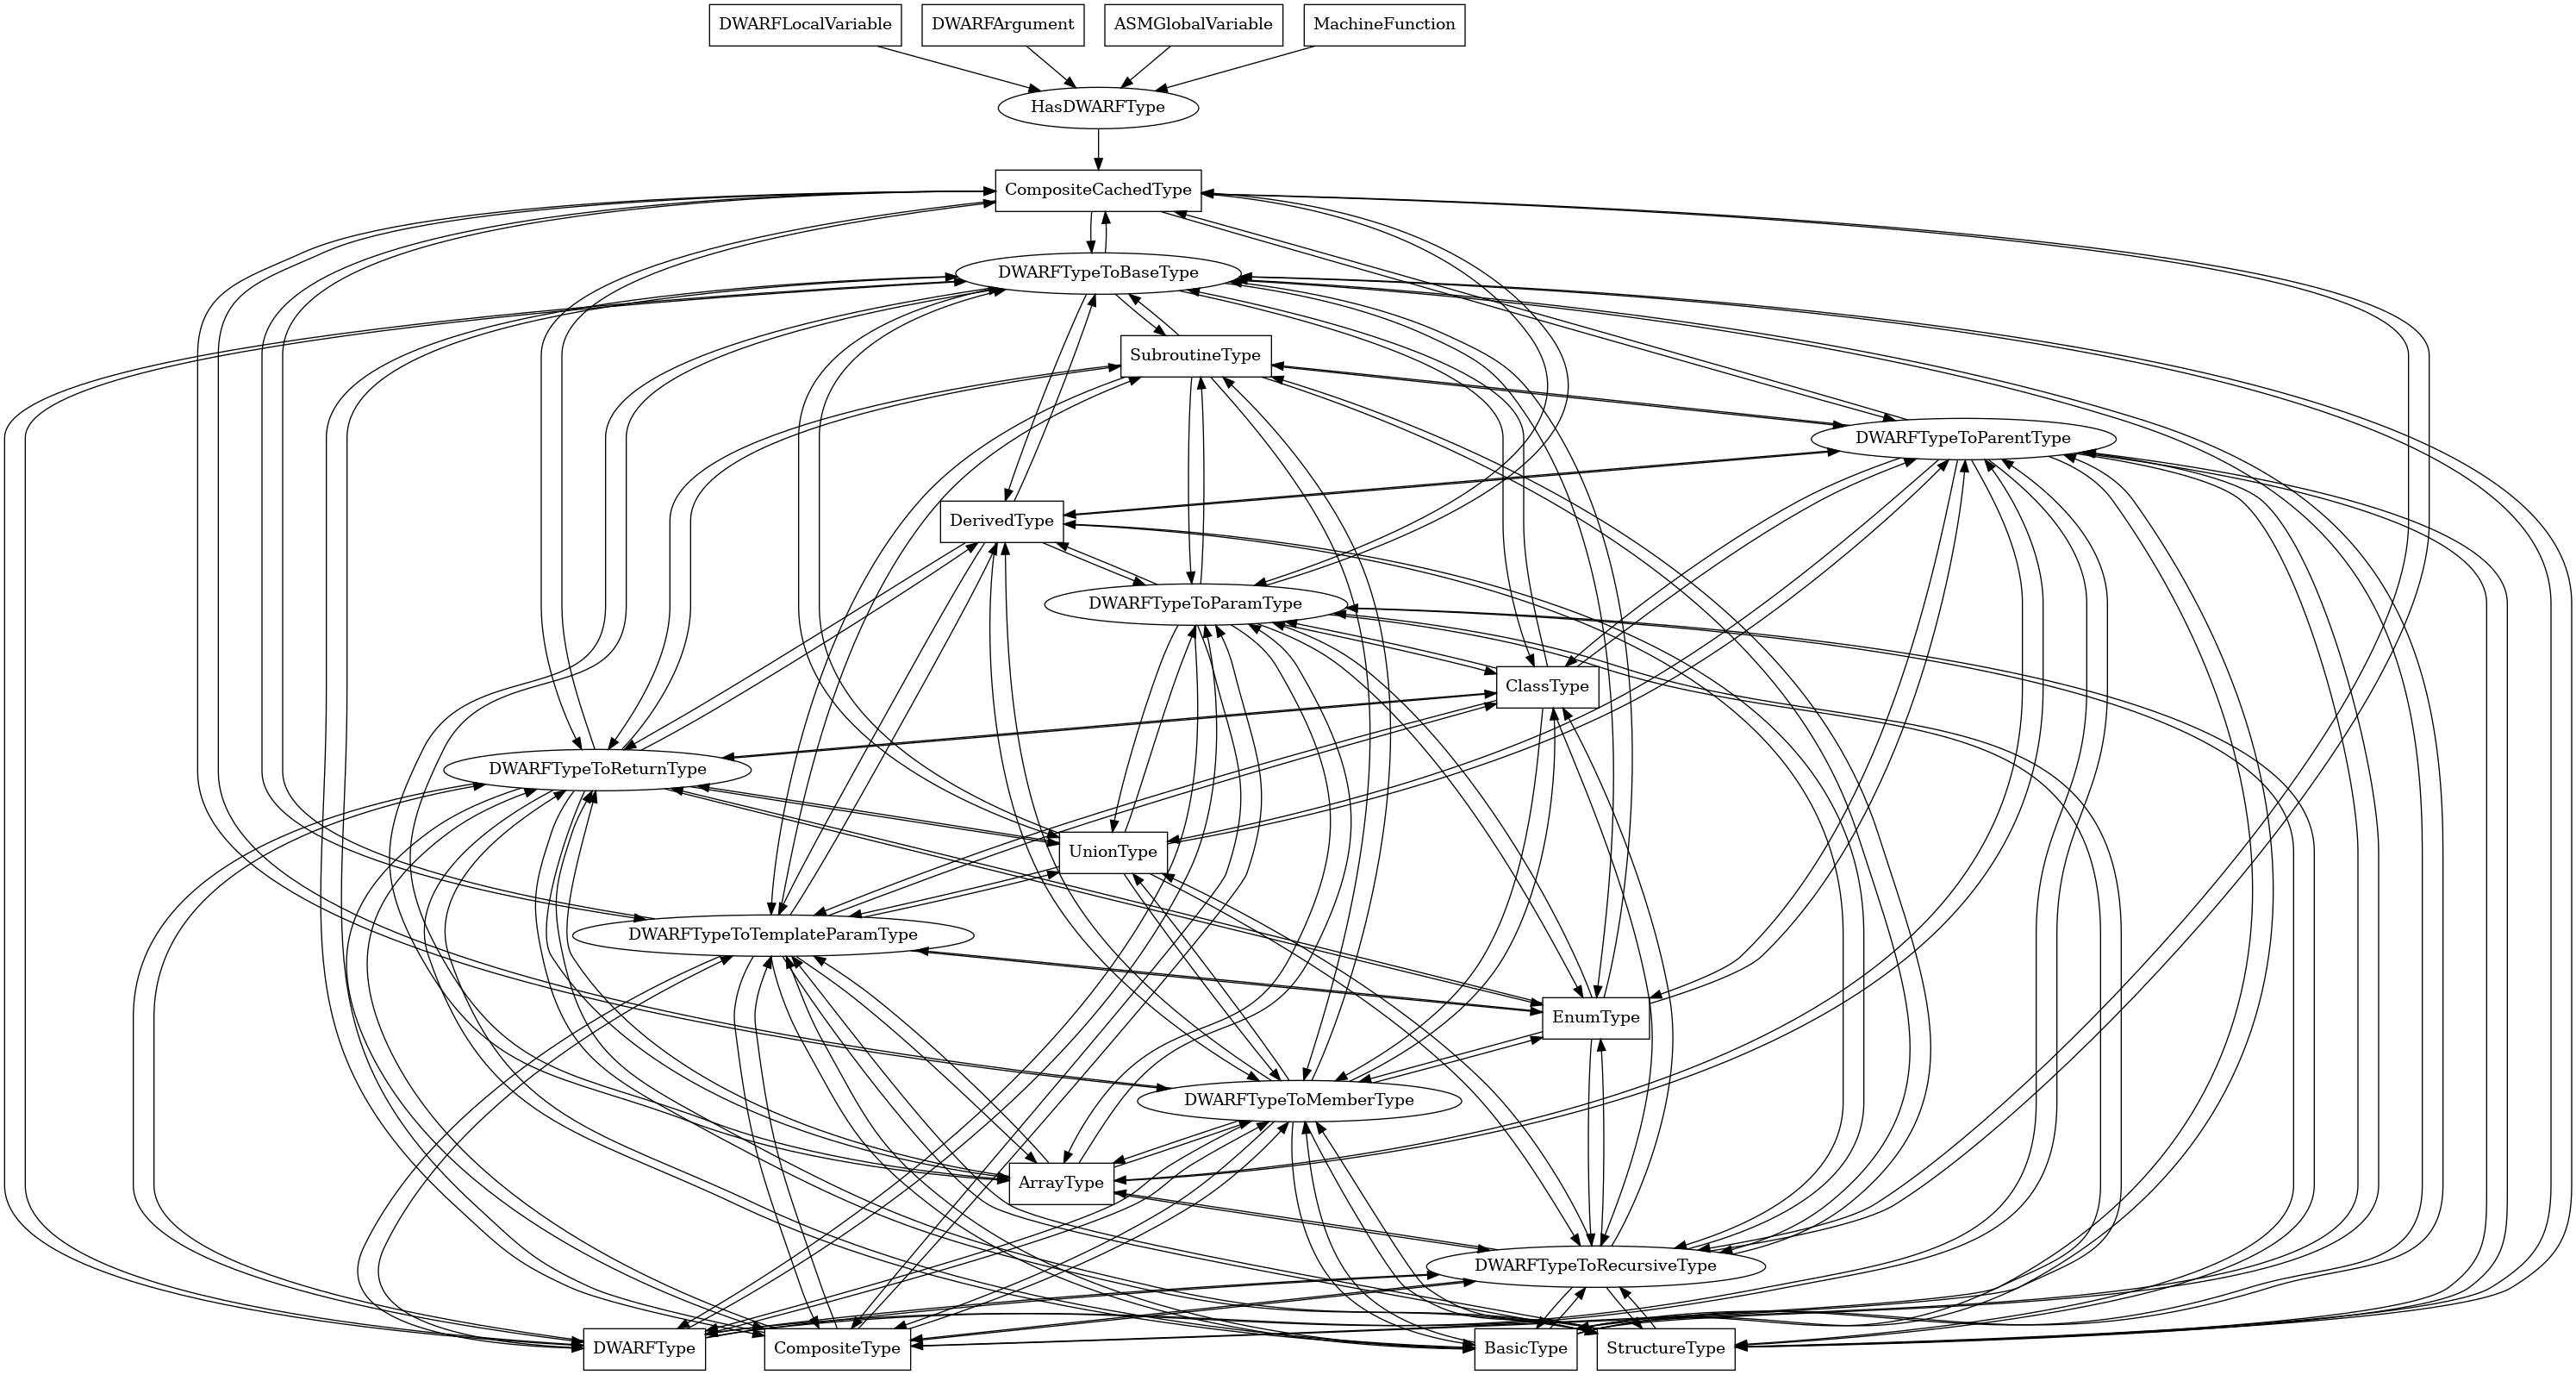 Entity-relationship diagram for CompositeCachedType nodes